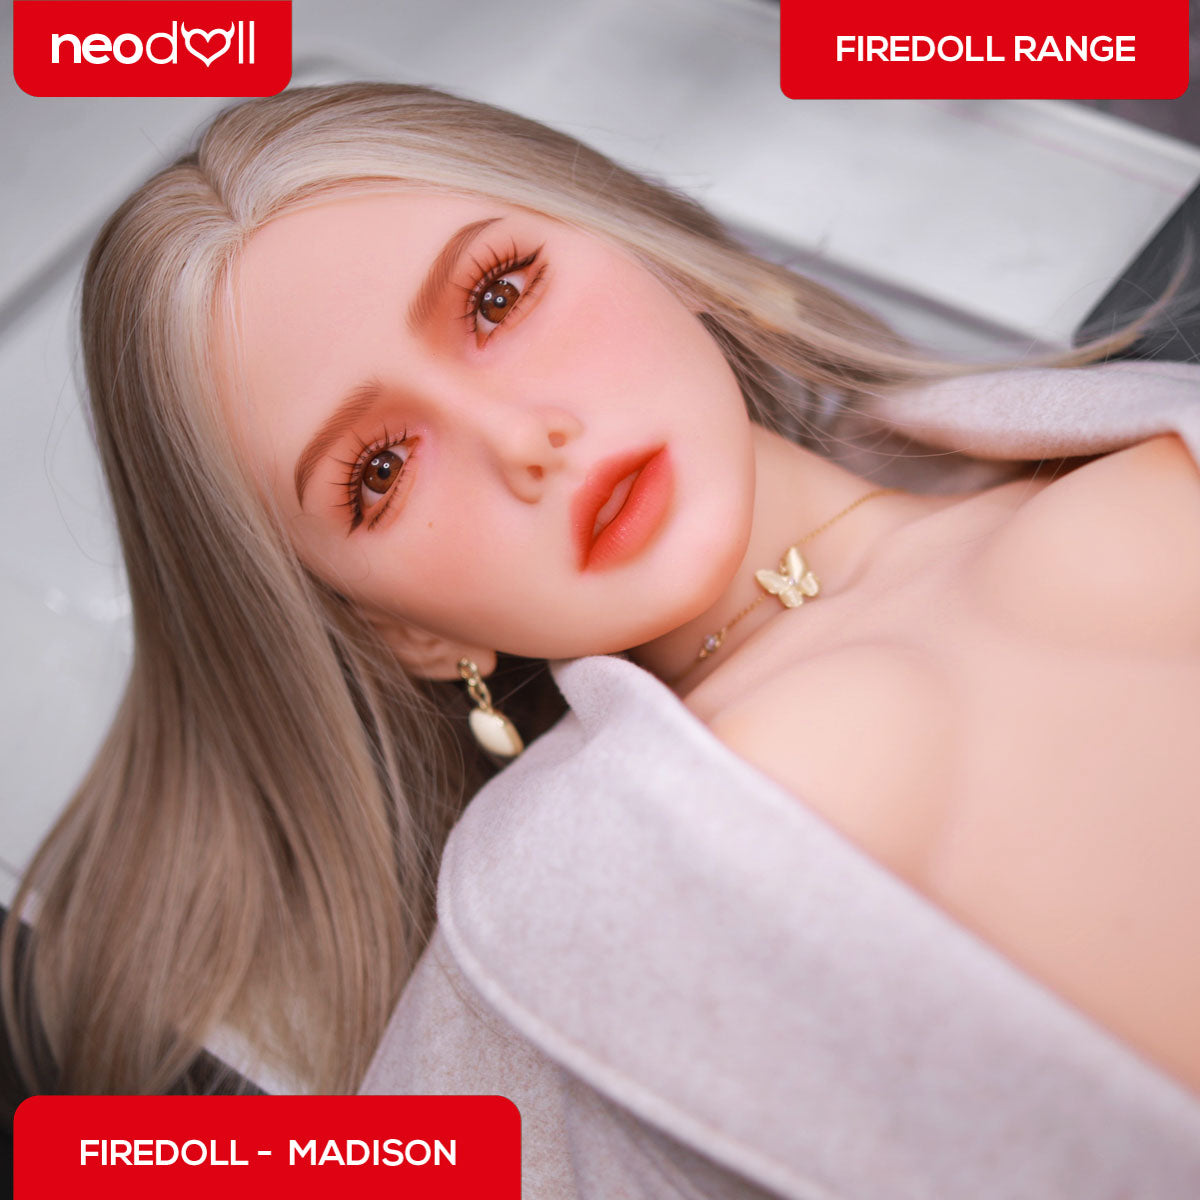 Firedoll Torso - Madison - Realistic Sex Doll Torso - Light tan